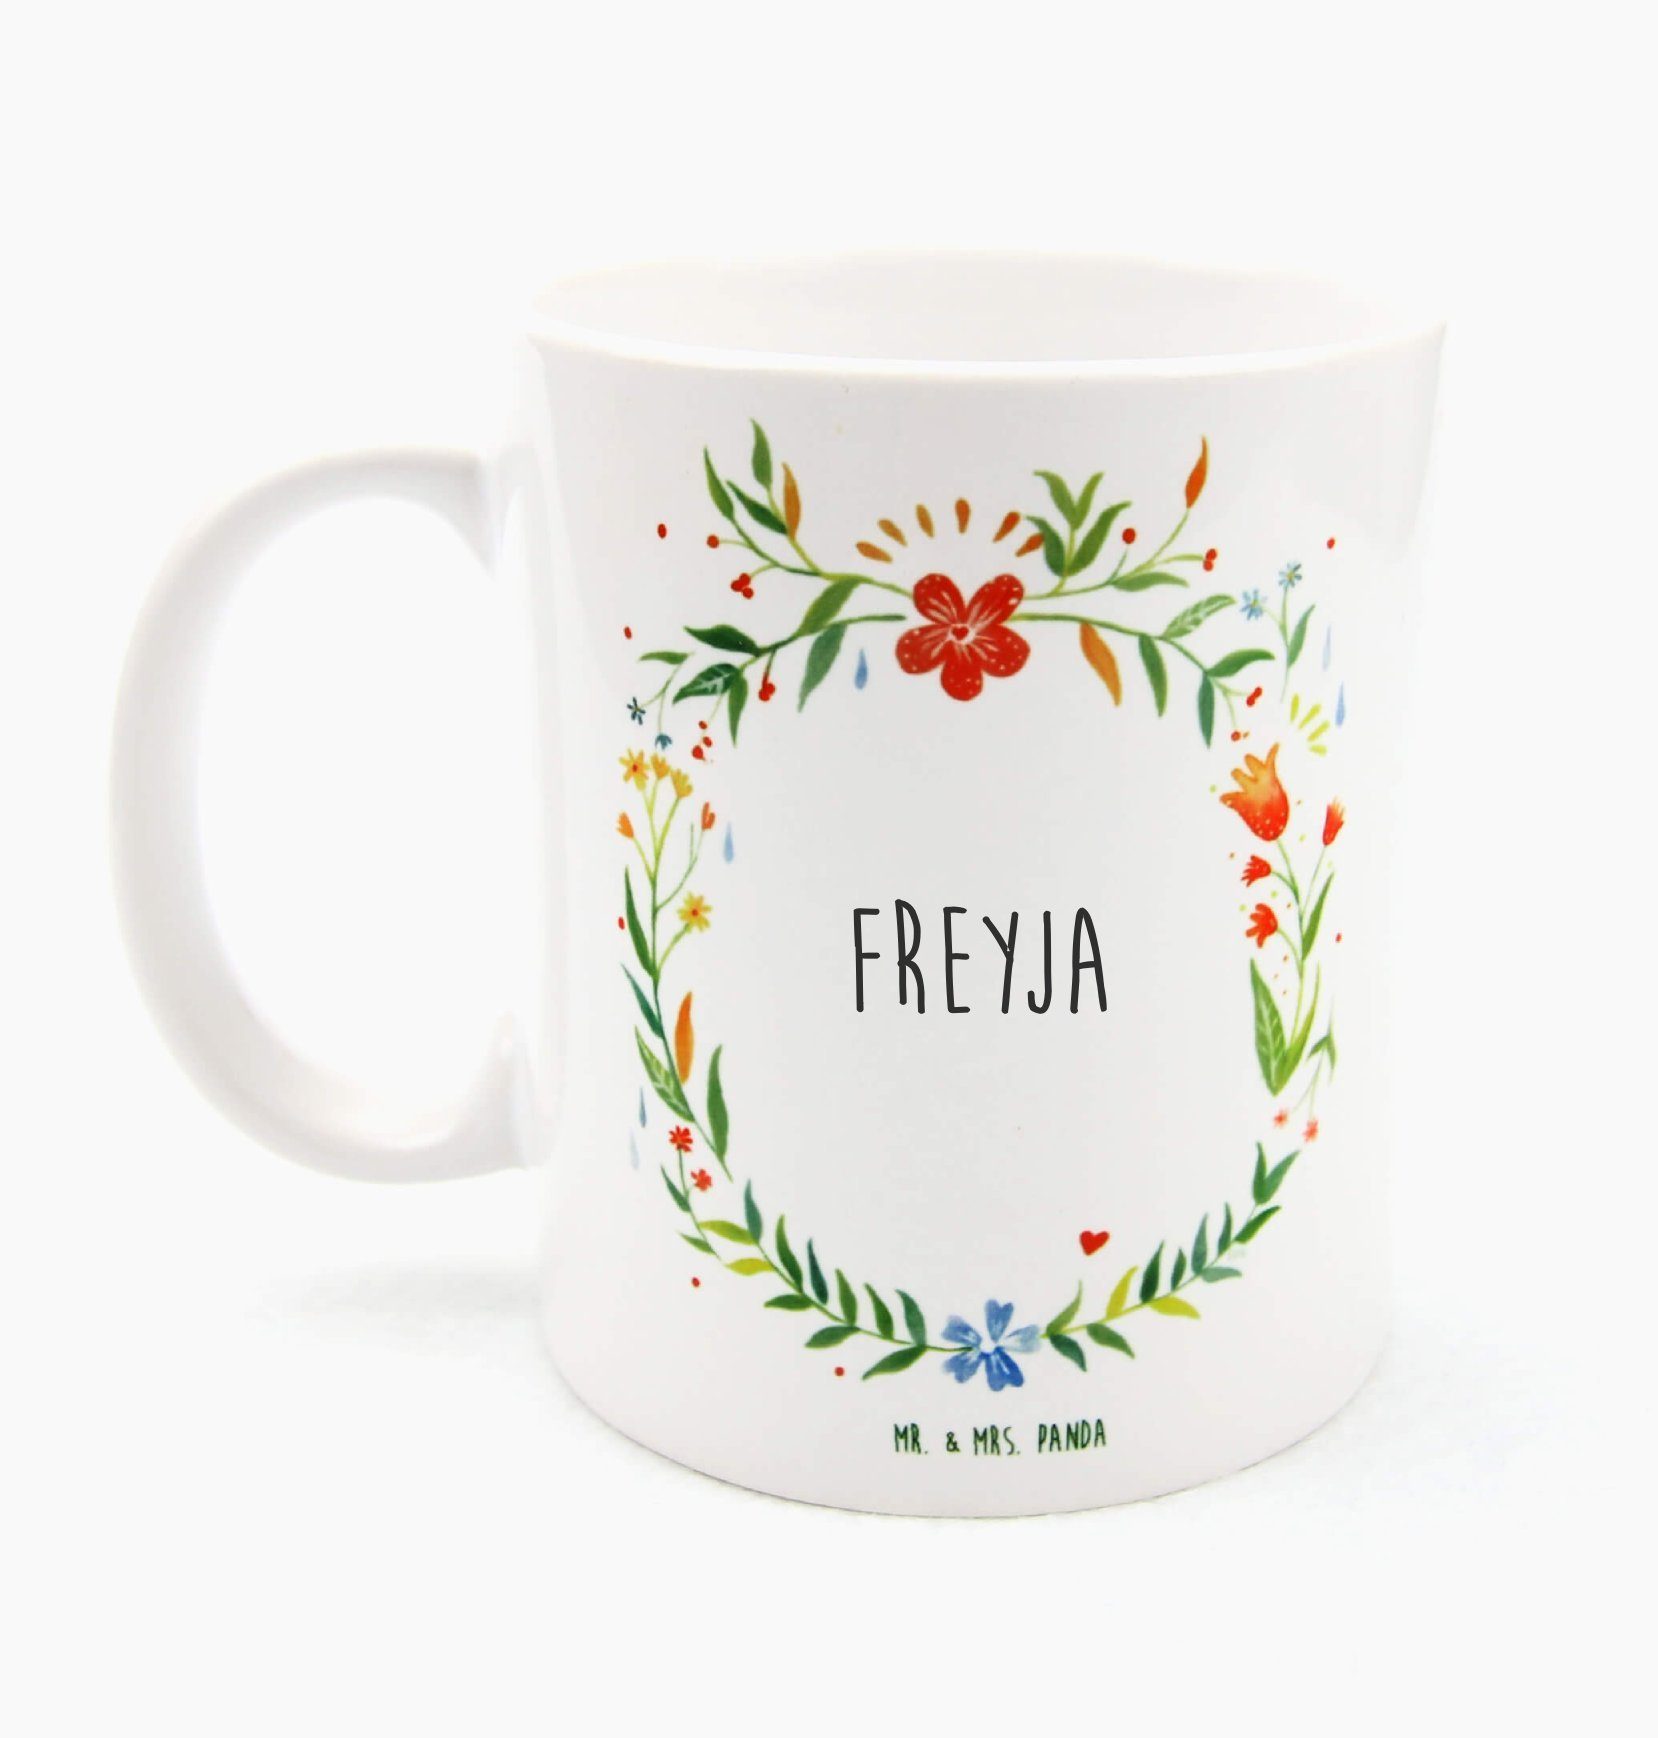 Mr. & Mrs. Panda Tasse Freyja - Geschenk, Teetasse, Becher, Kaffeetasse, Geschenk Tasse, Tee, Keramik